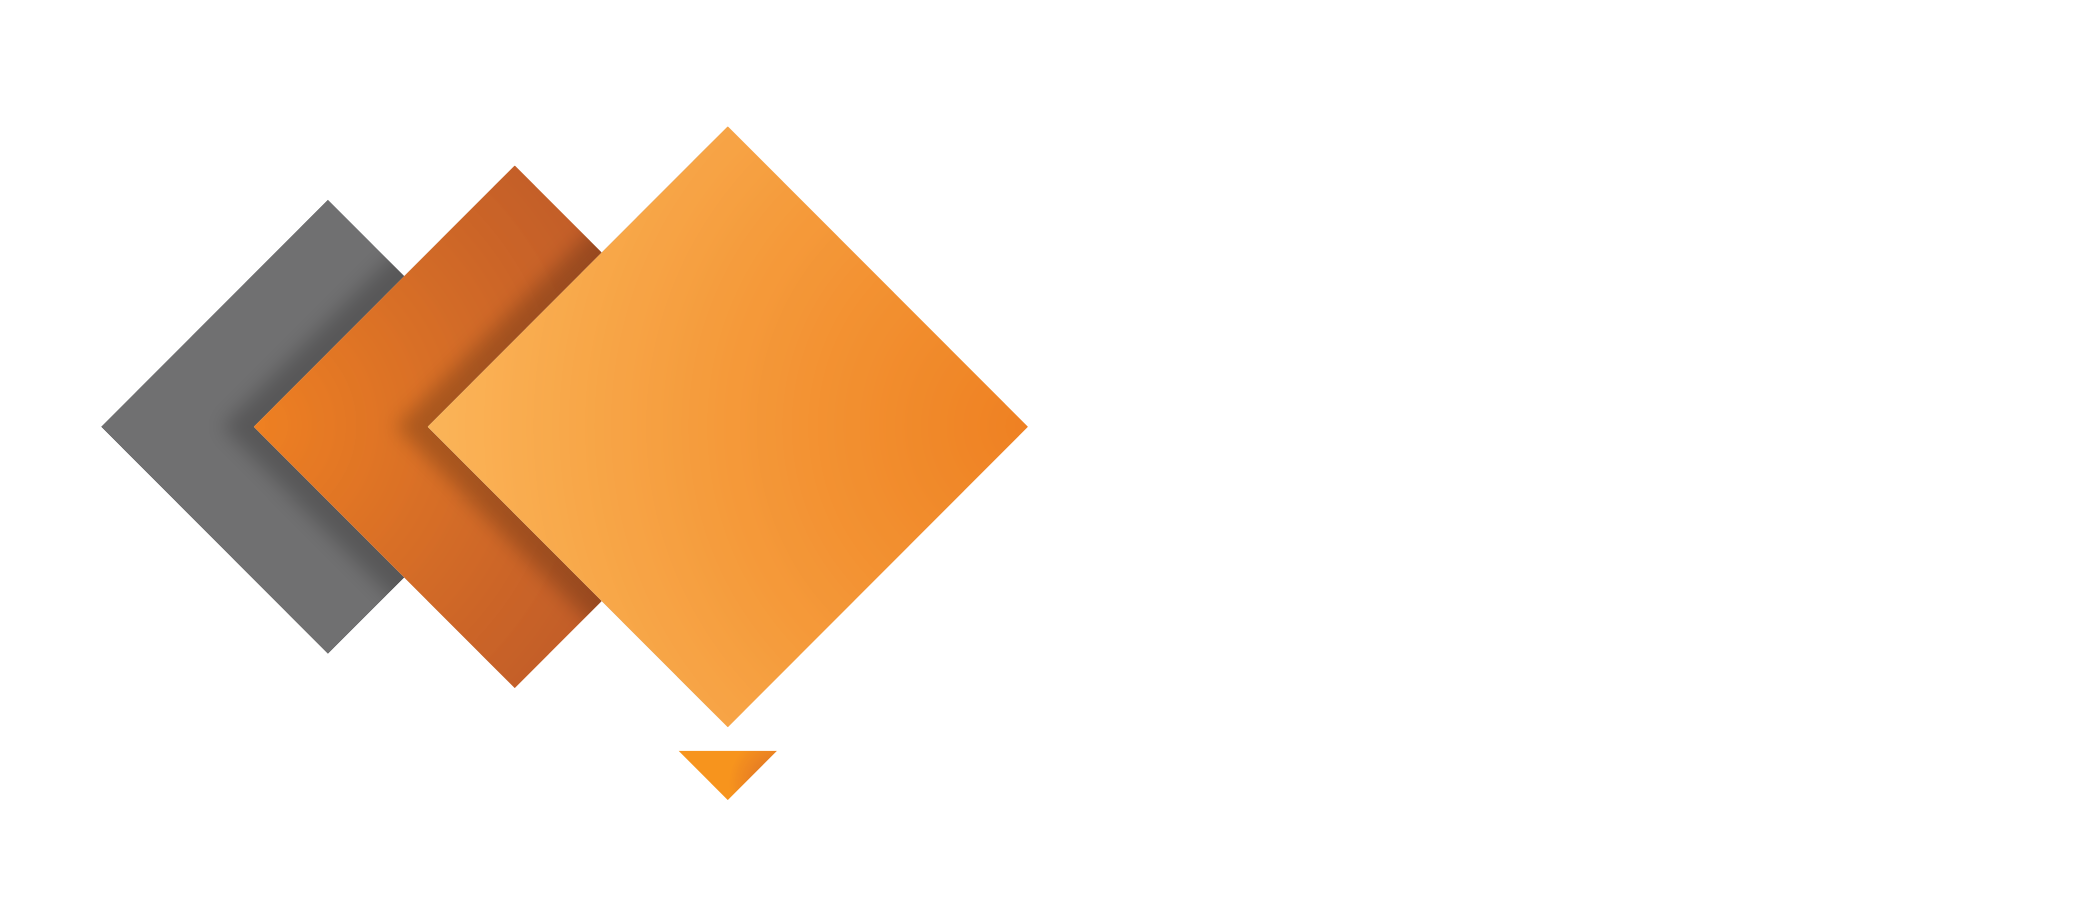 Blockchain Australia industry member